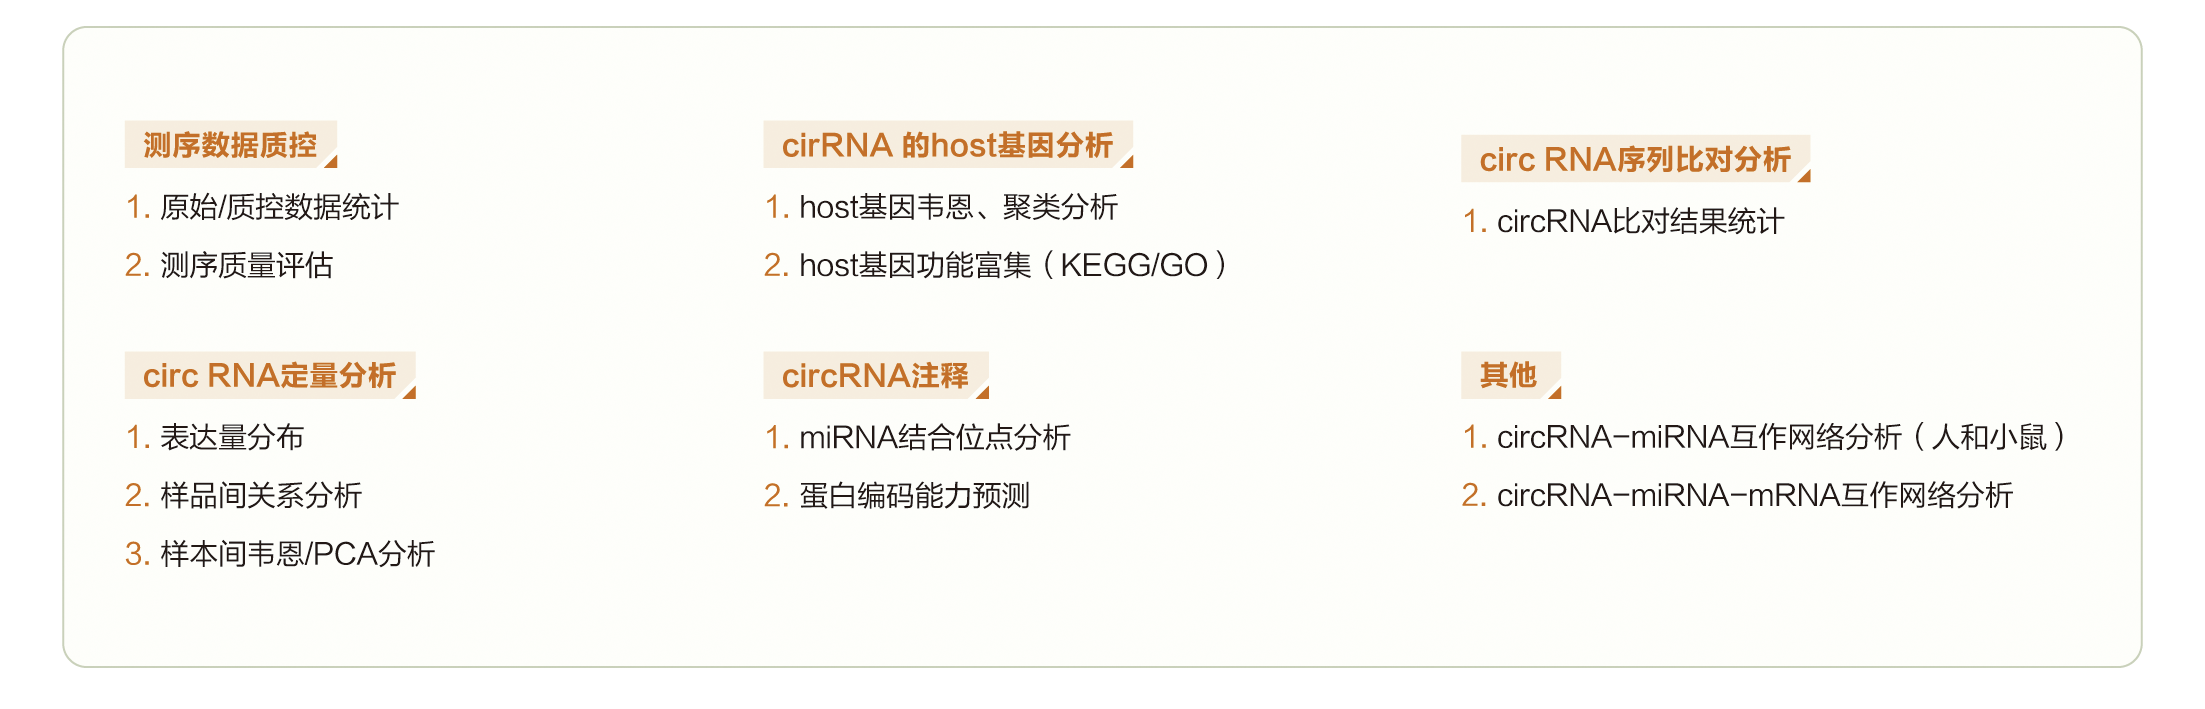 circRNA测序-分析内容